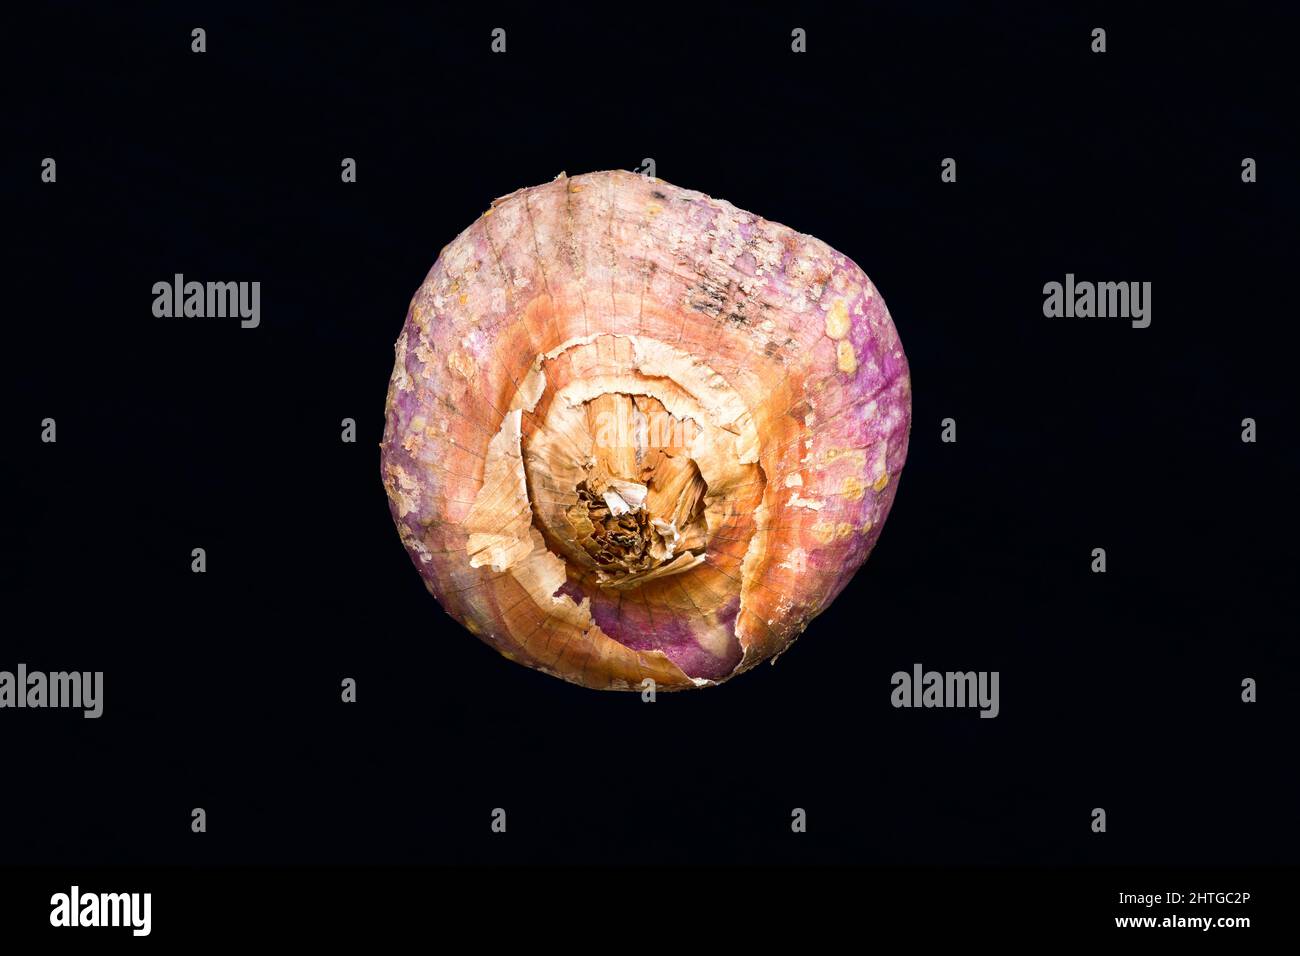 Brown and purple shallot, Allium Cepa onion, isolated on dark background Stock Photo